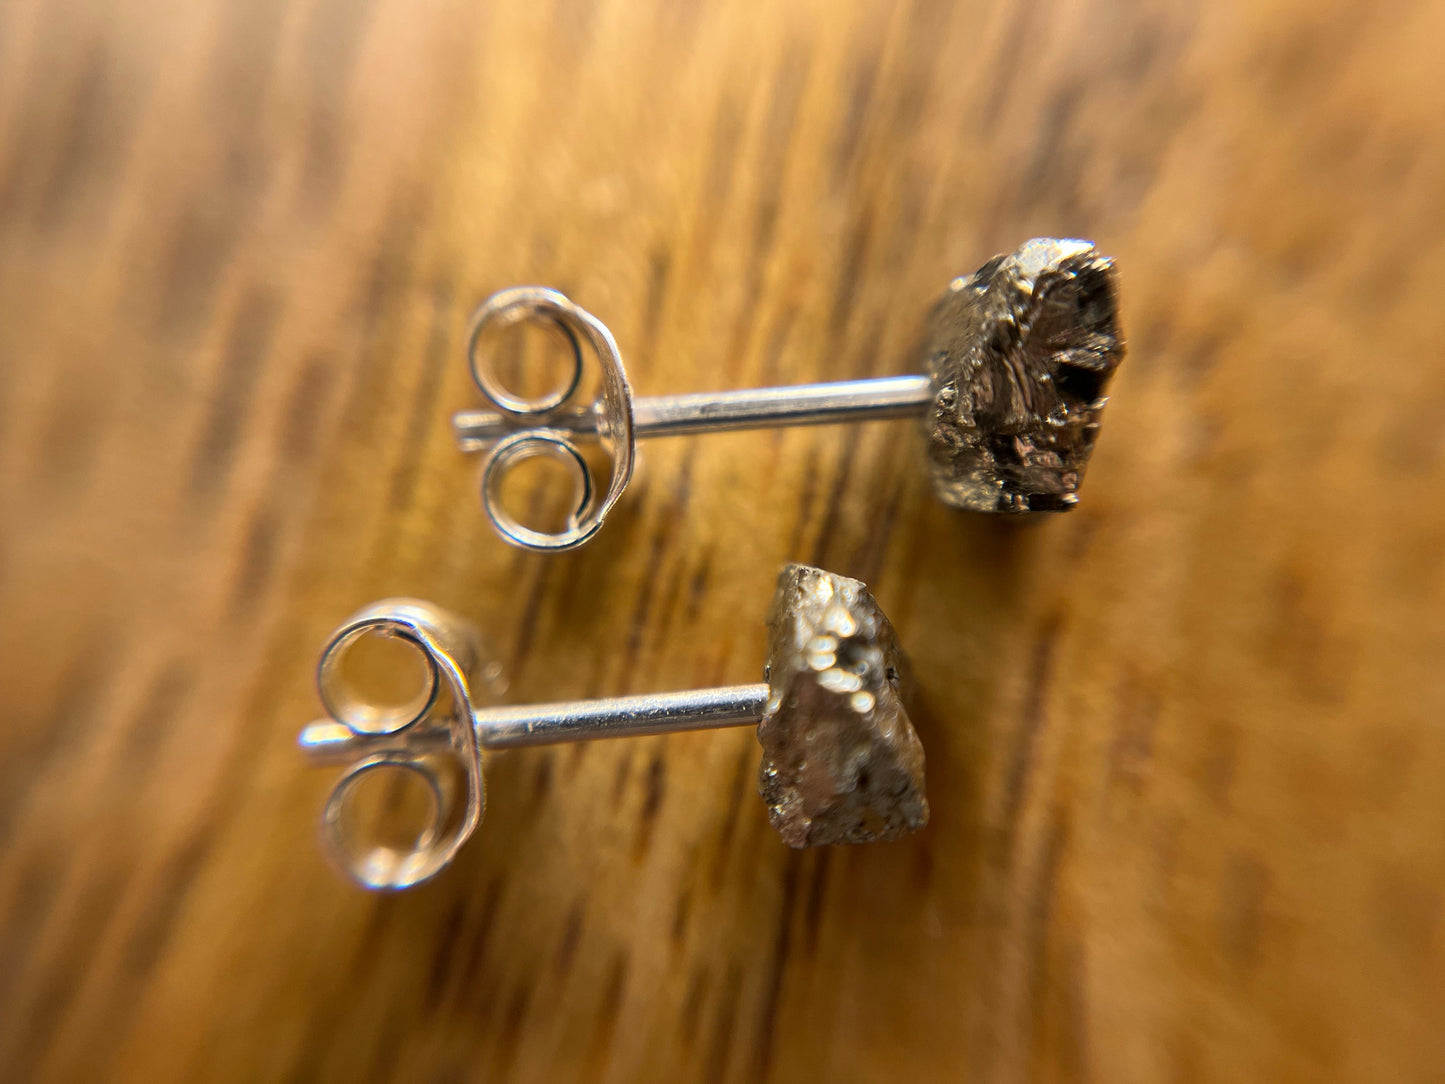 925 Silver Pyrite Stud Earrings, Raw Pyrite Earrings, Natural Crystal Earrings, August Birthstone Jewellery, Dainty Fools Gold Pyrite Studs